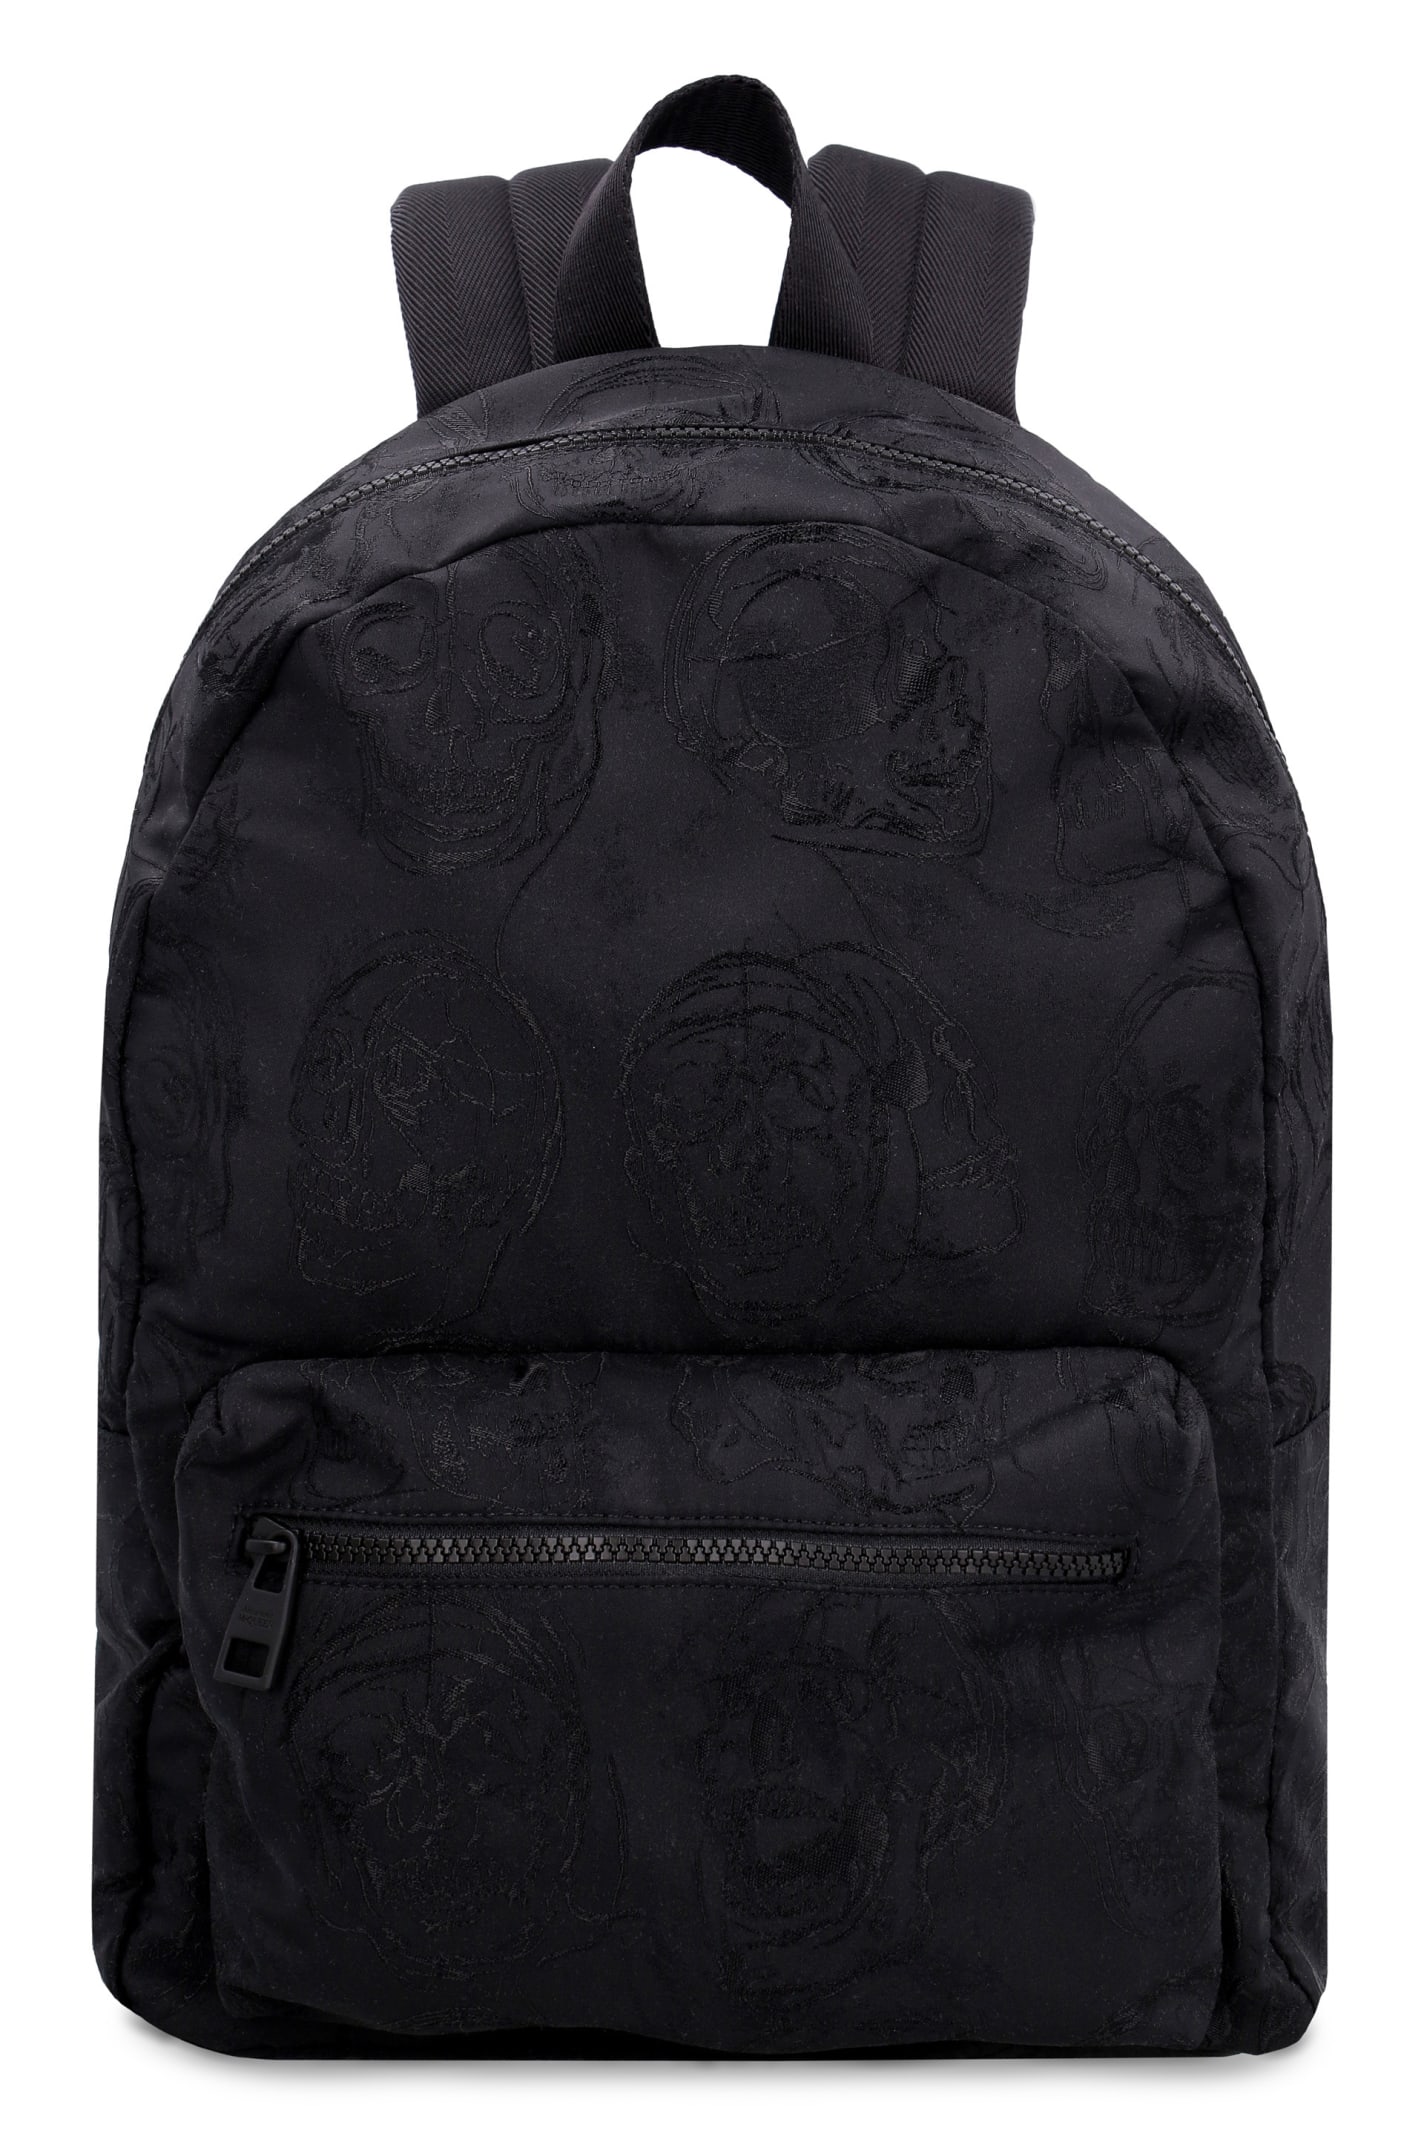 Alexander McQueen Jacquard Fabric Backpack